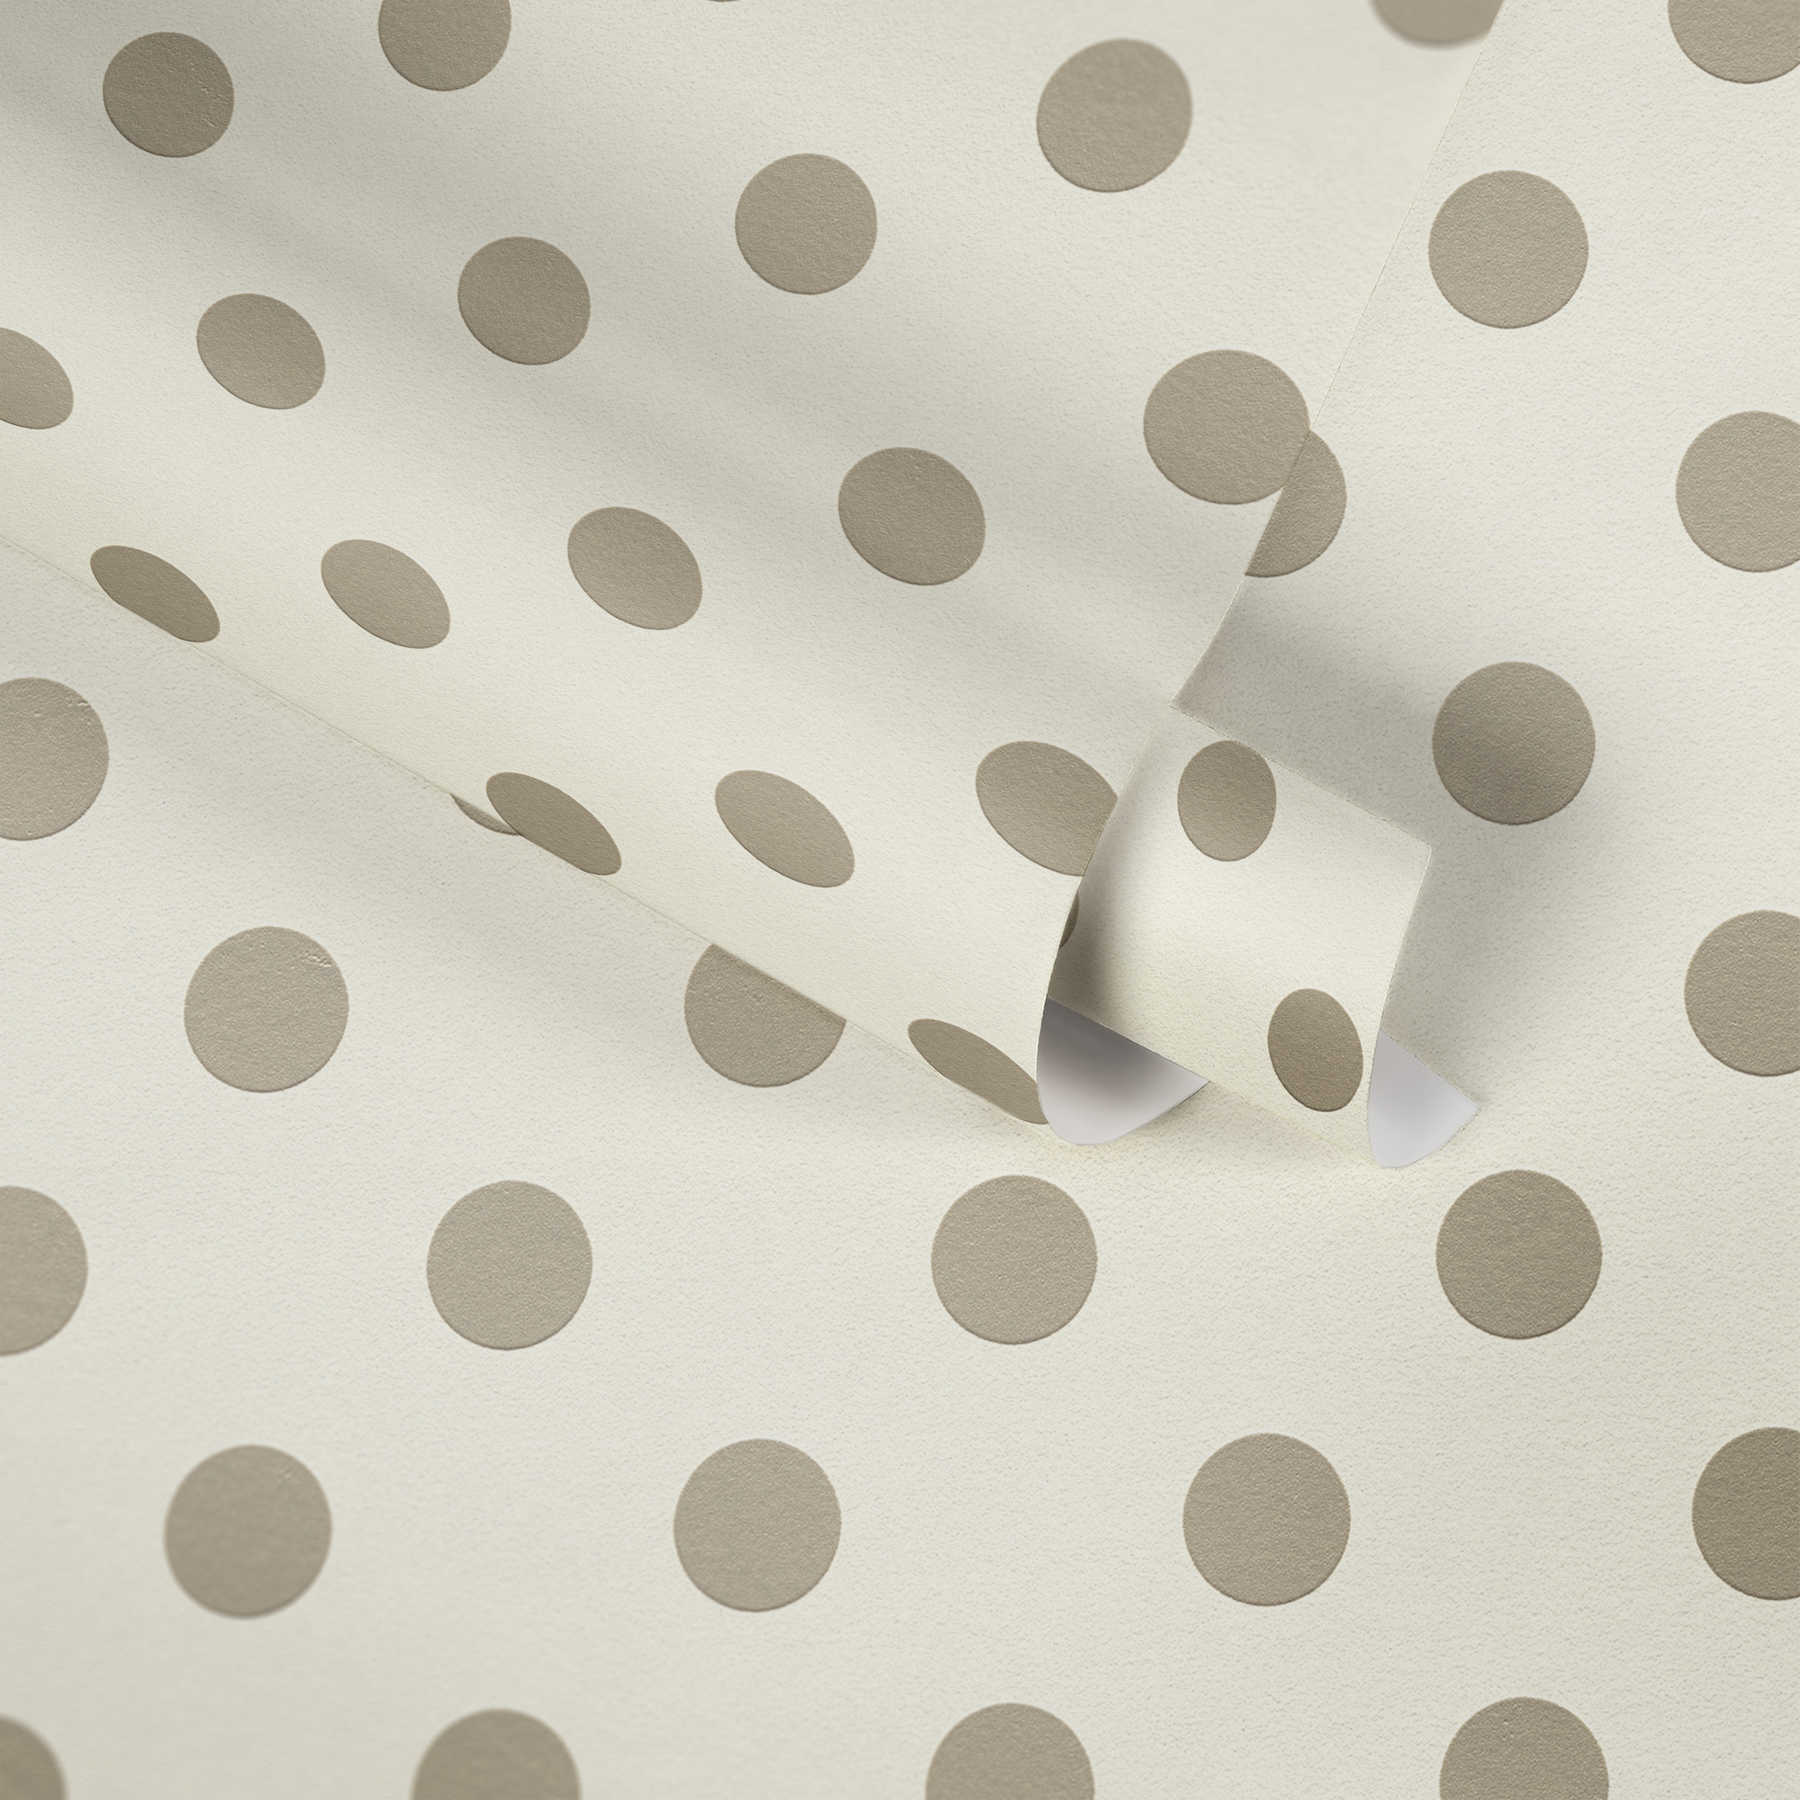             Non-woven wallpaper dots, polka dots design for Nursery - beige, pink
        